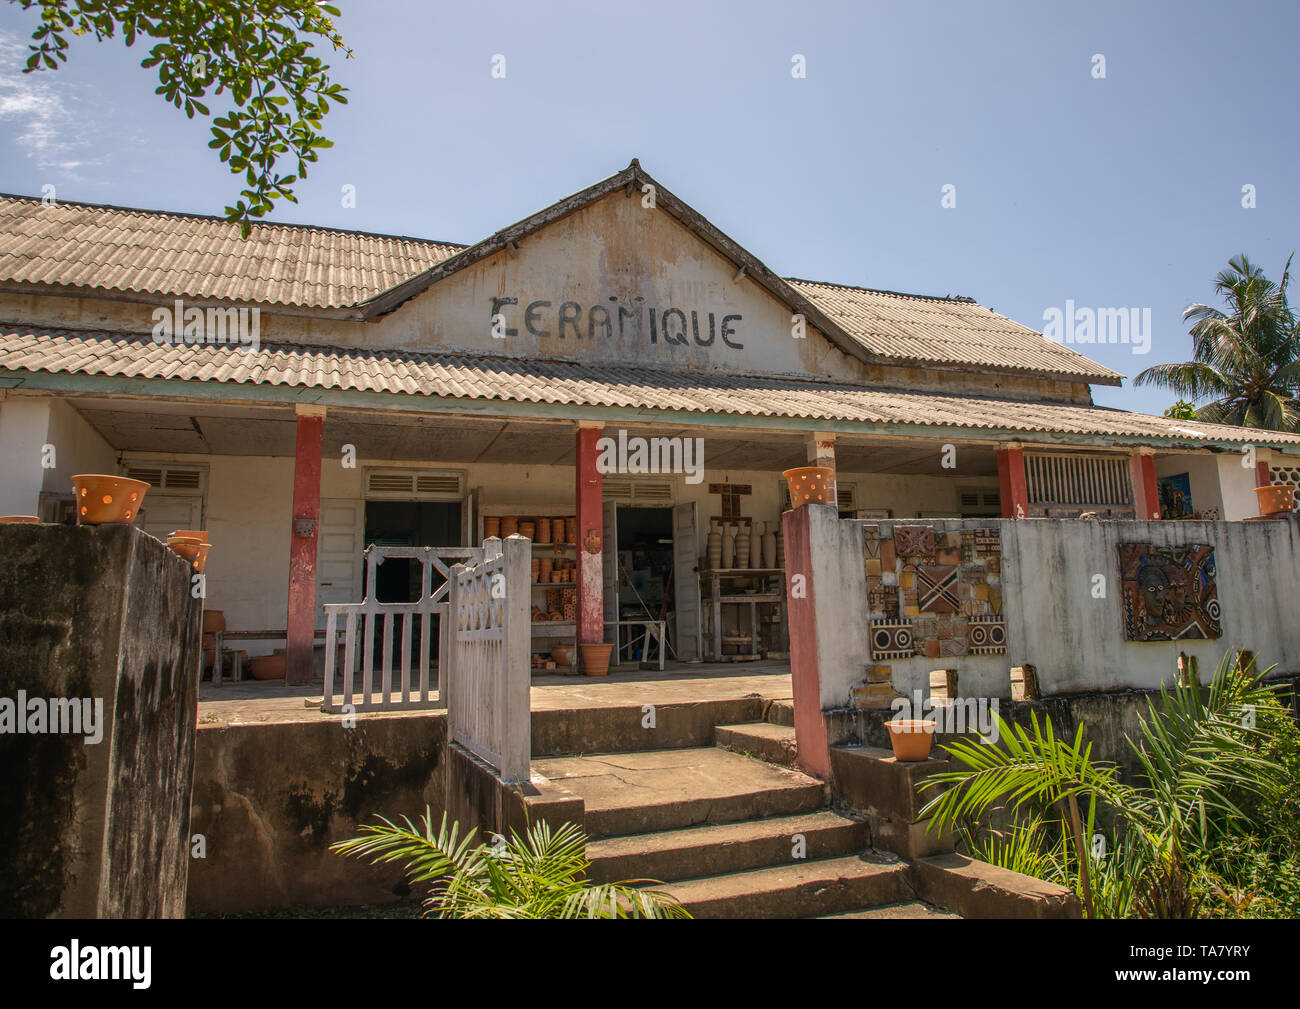 Centre céramique formerly cercle de l'union européenne, Sud-Comoé, Grand-Bassam, Ivory Coast Stock Photo